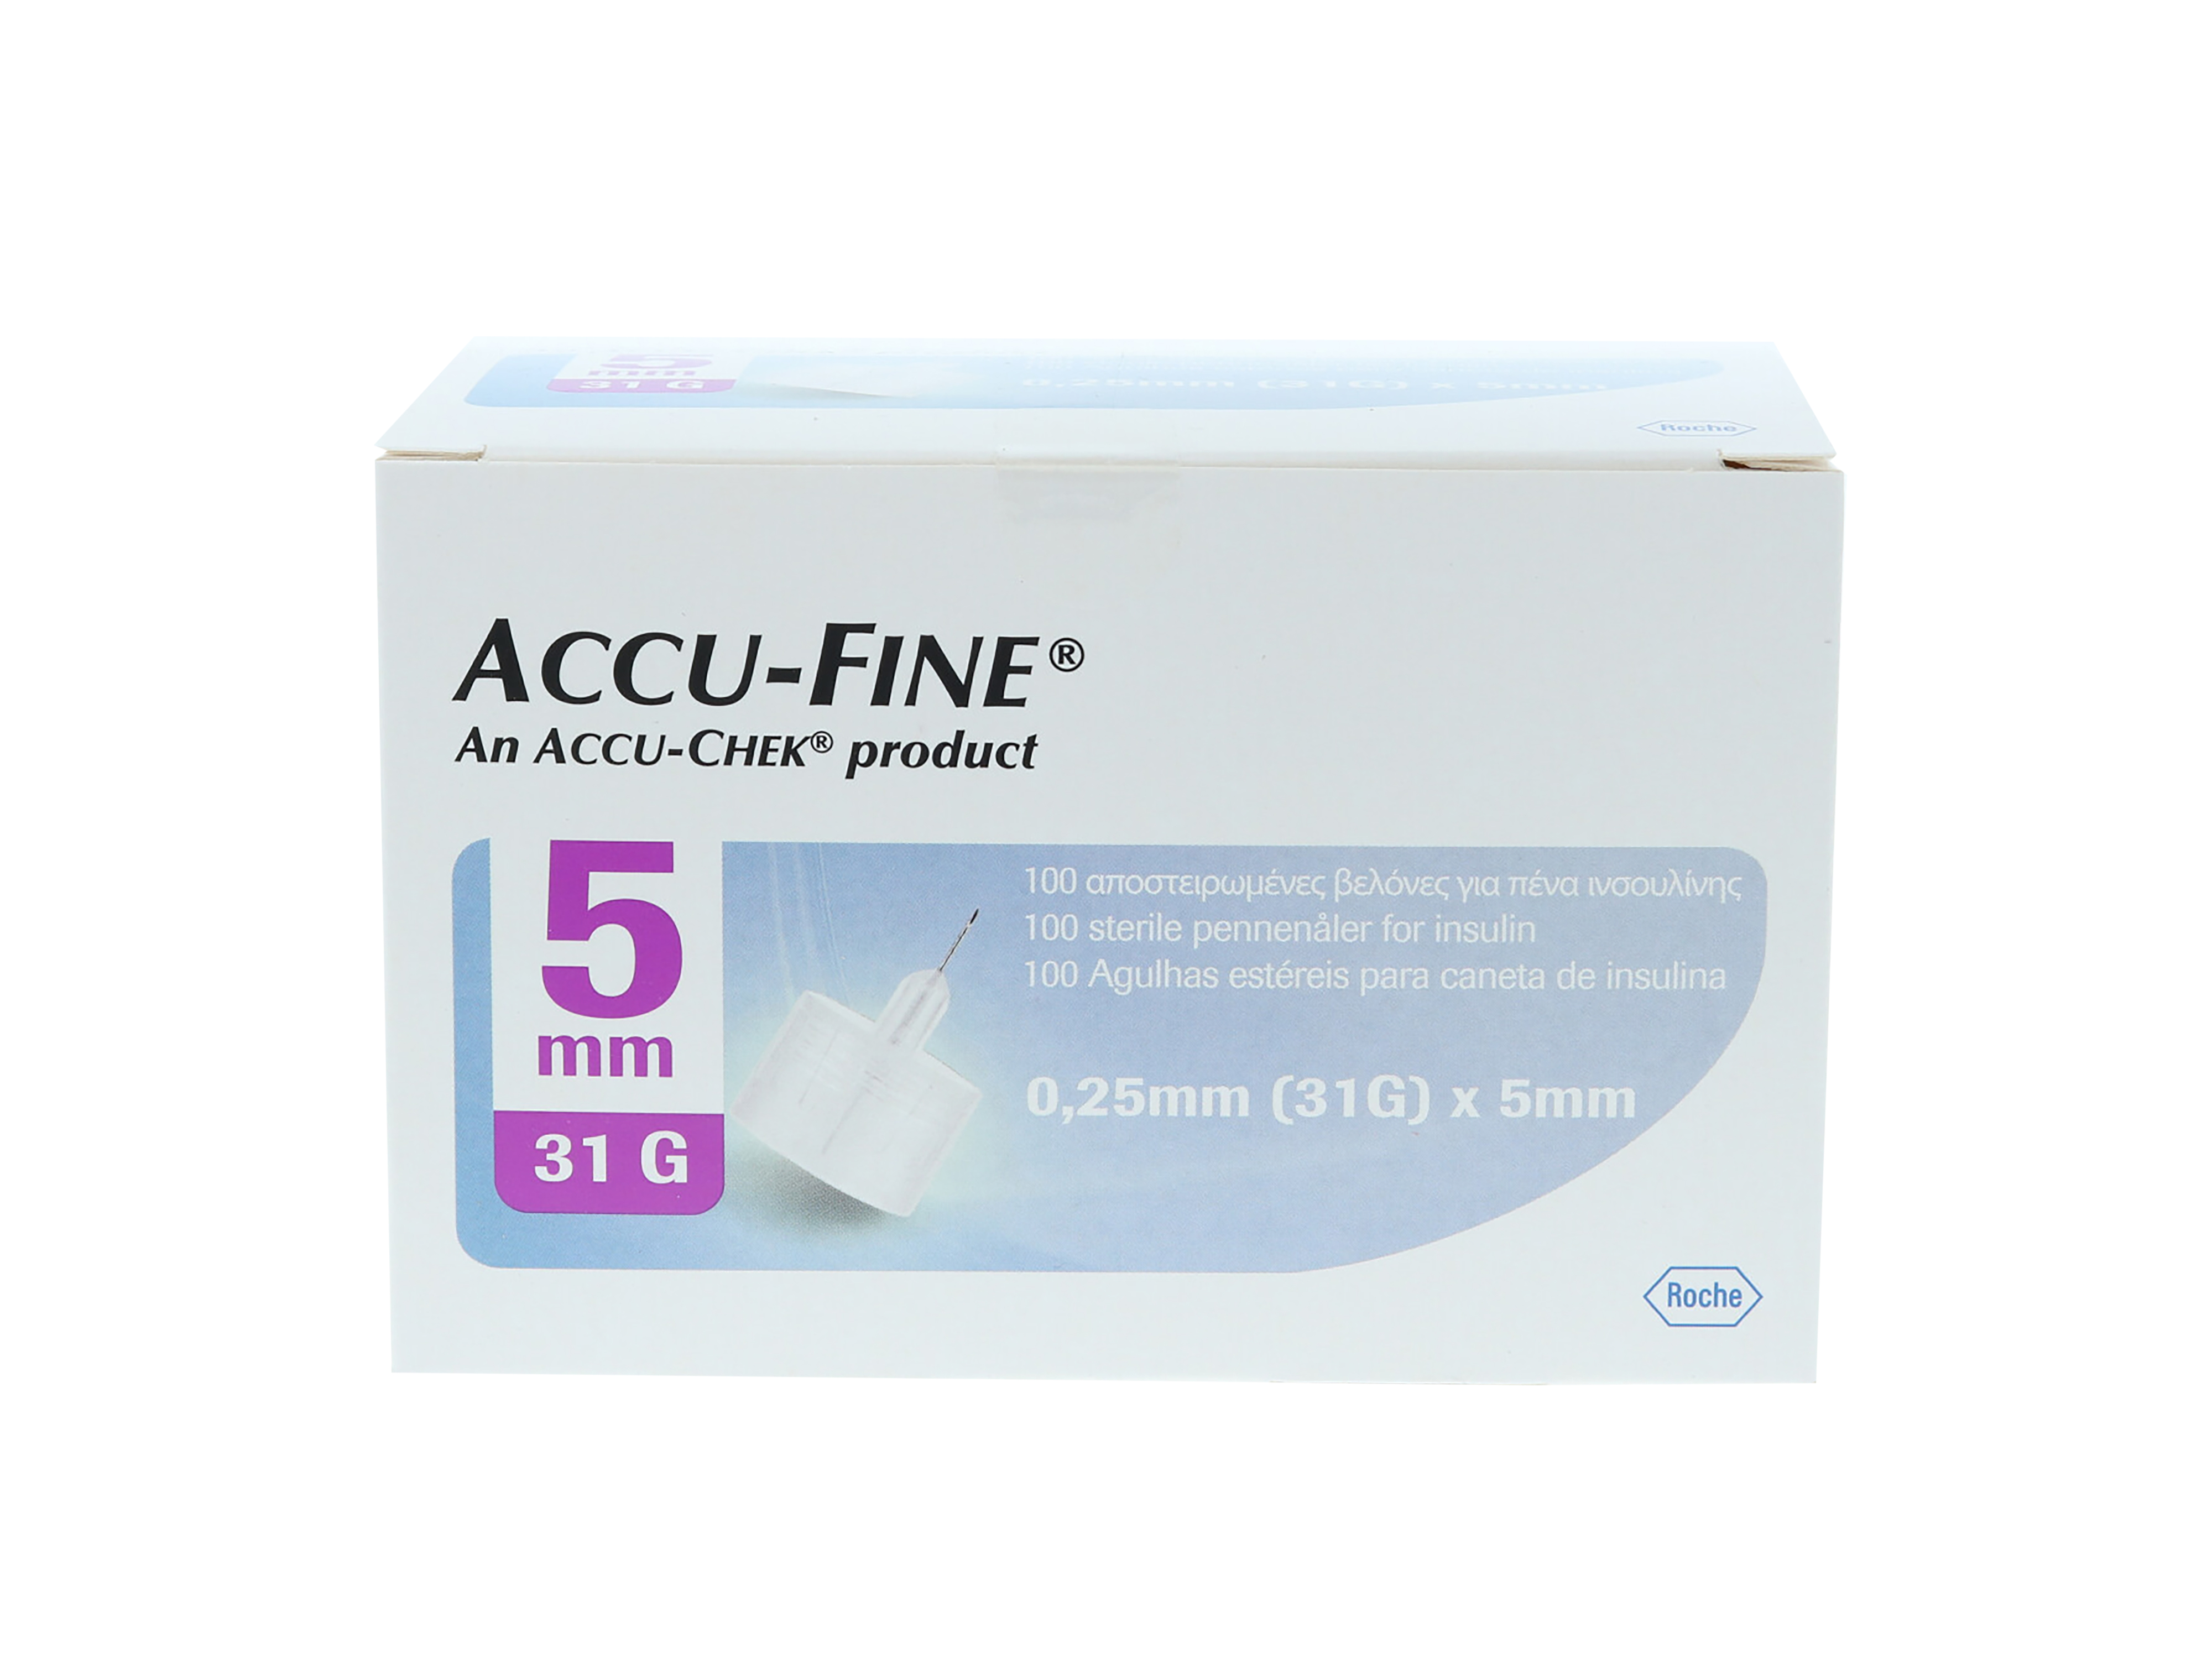 Accu-fine Pennekanyler til insulinpenner, 31G 5mm (0,25mm x 5mm), 100 stk